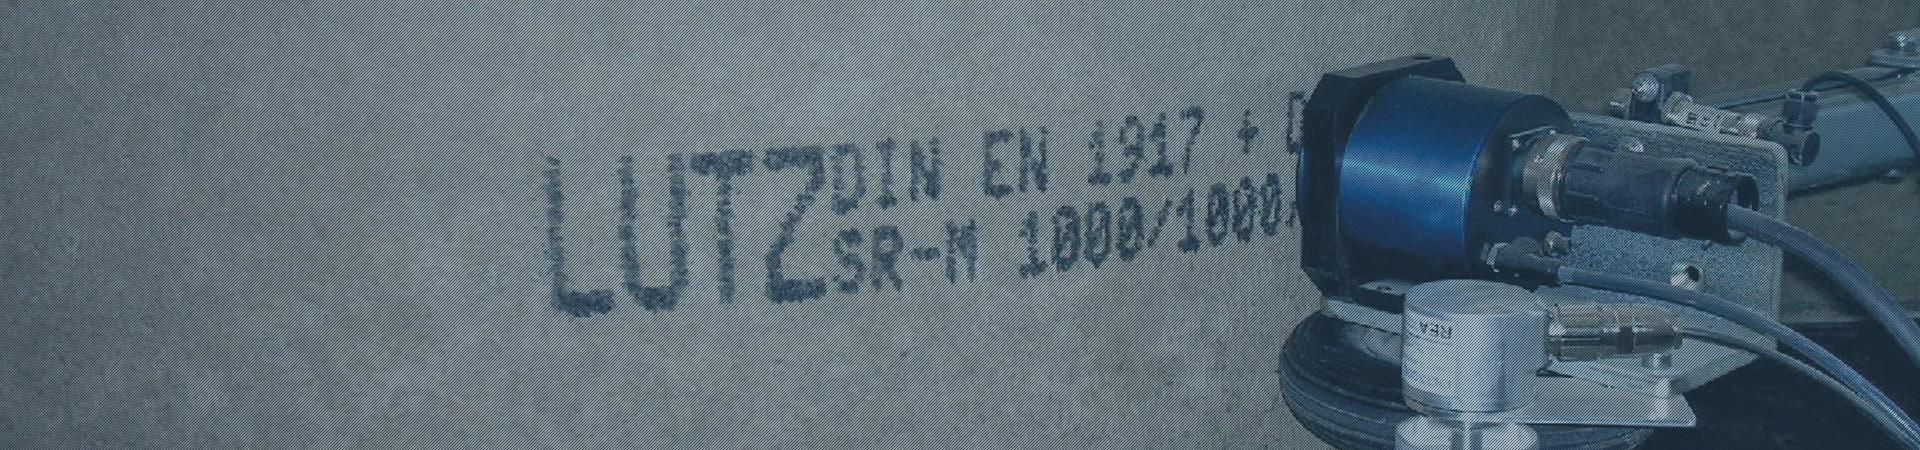 Inkjet printer for cement gutters - REA JET DOD